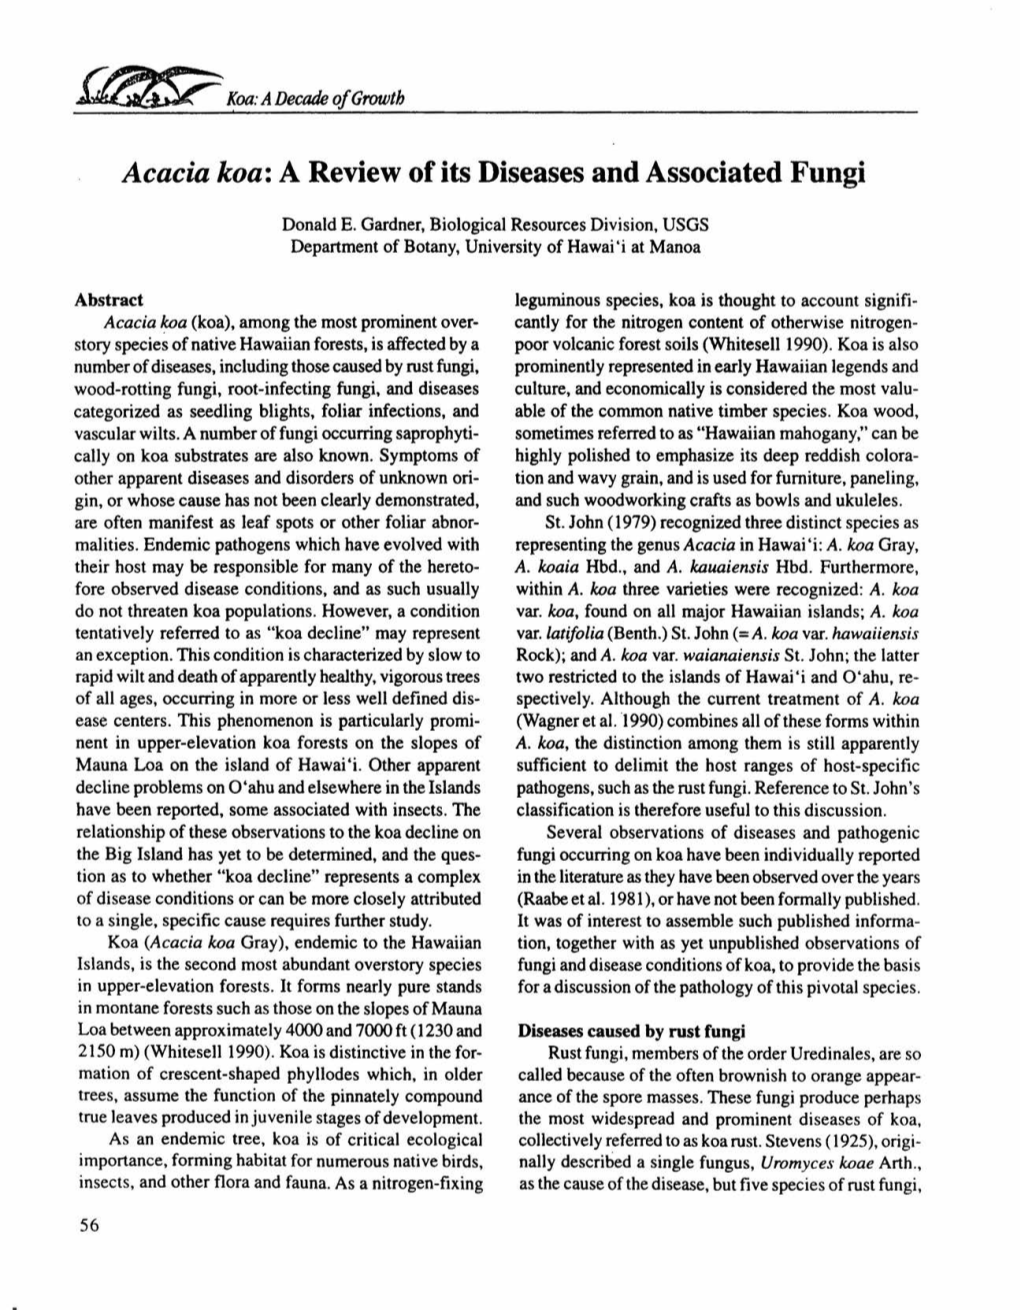 Acacia Koa: a Review of Its Diseases and Associated Fungi